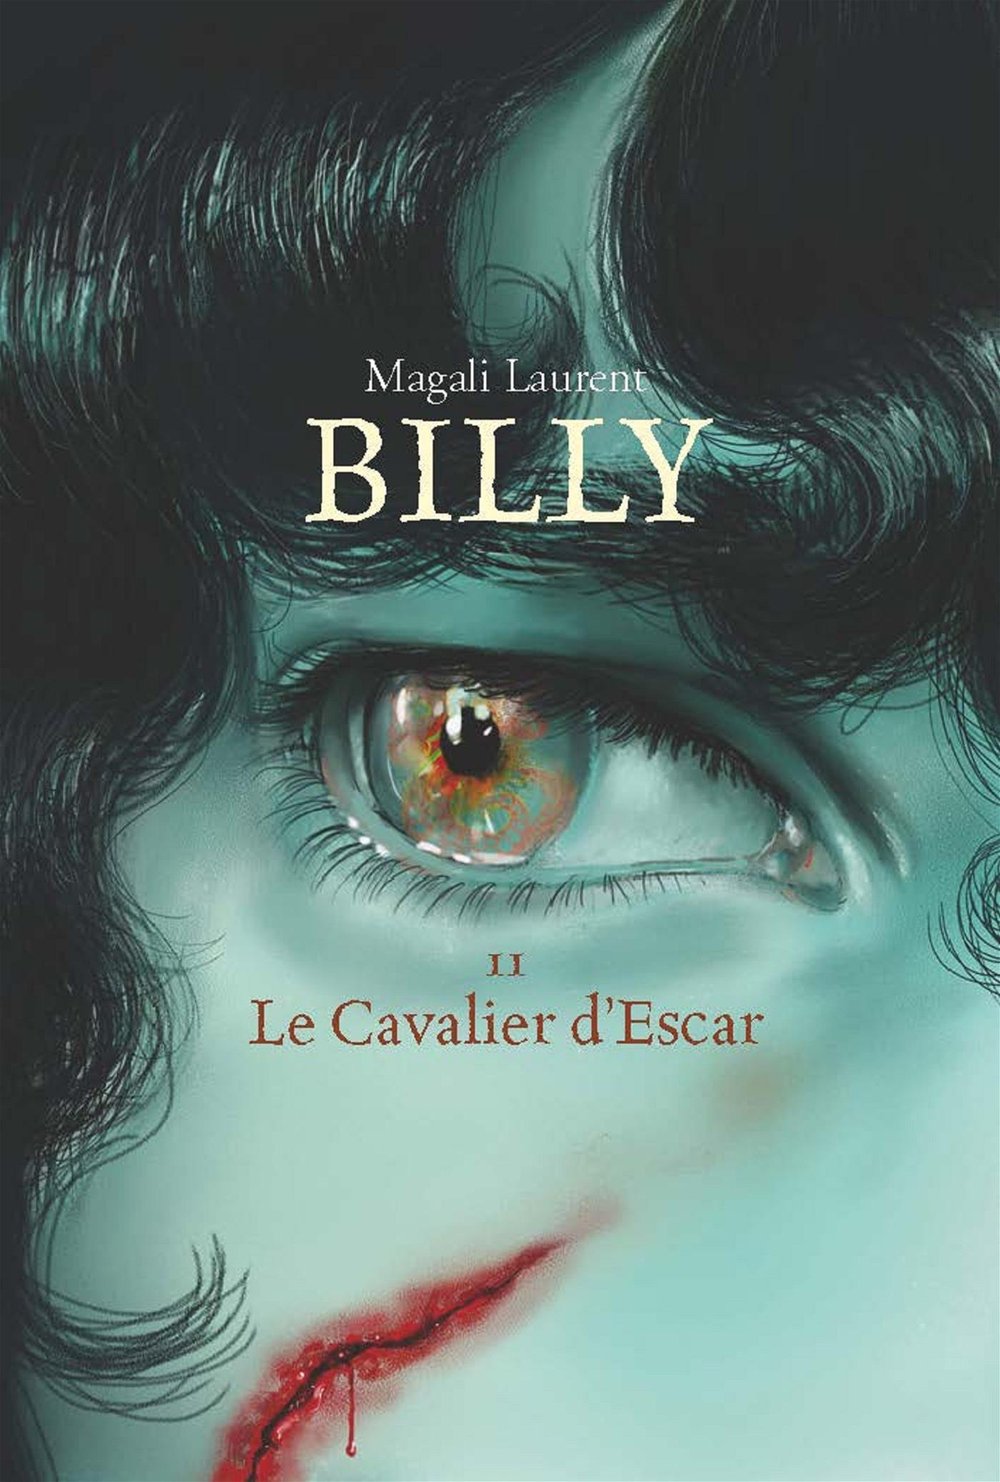 BillY T2, Le Cavalier d'Escar<br/><span>By Magali Laurent</span>